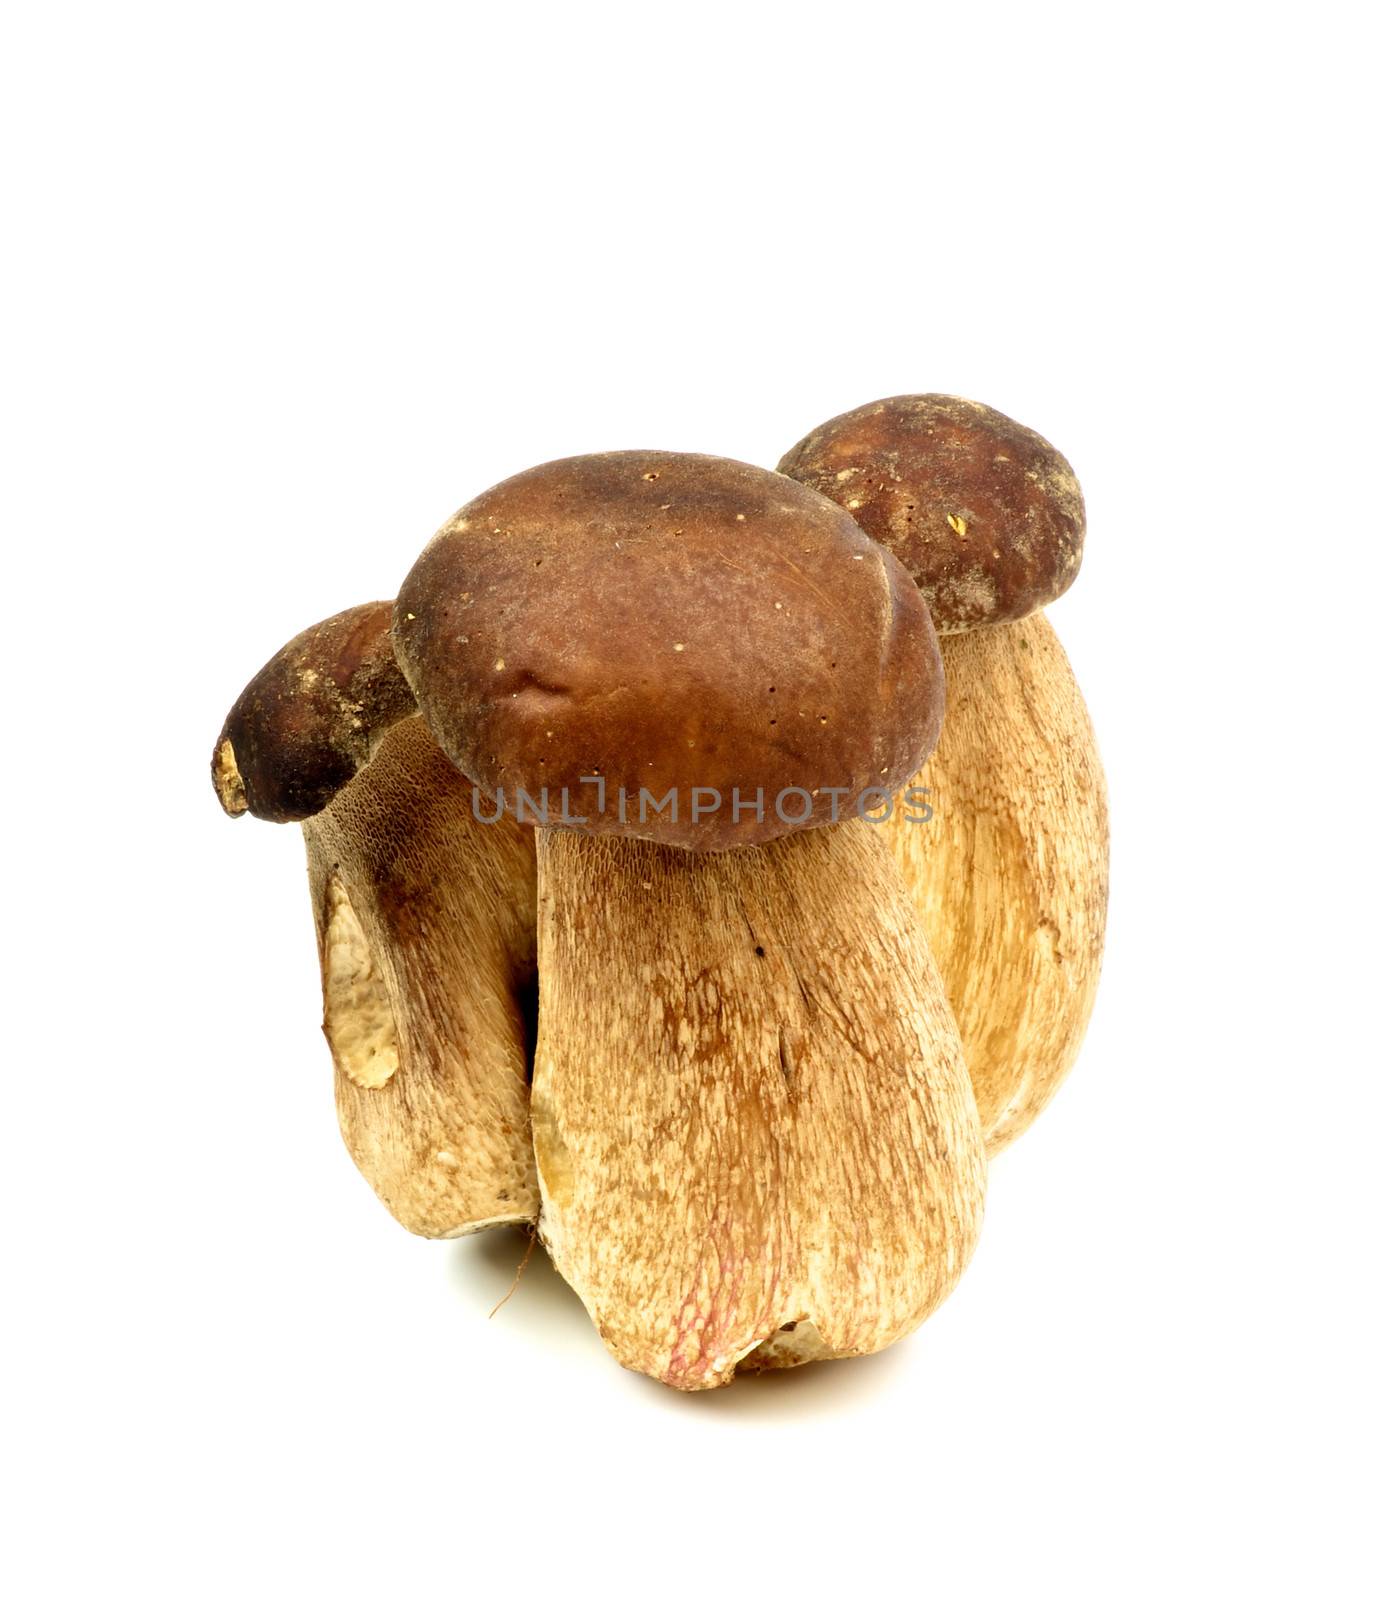 Porcini Mushrooms by zhekos